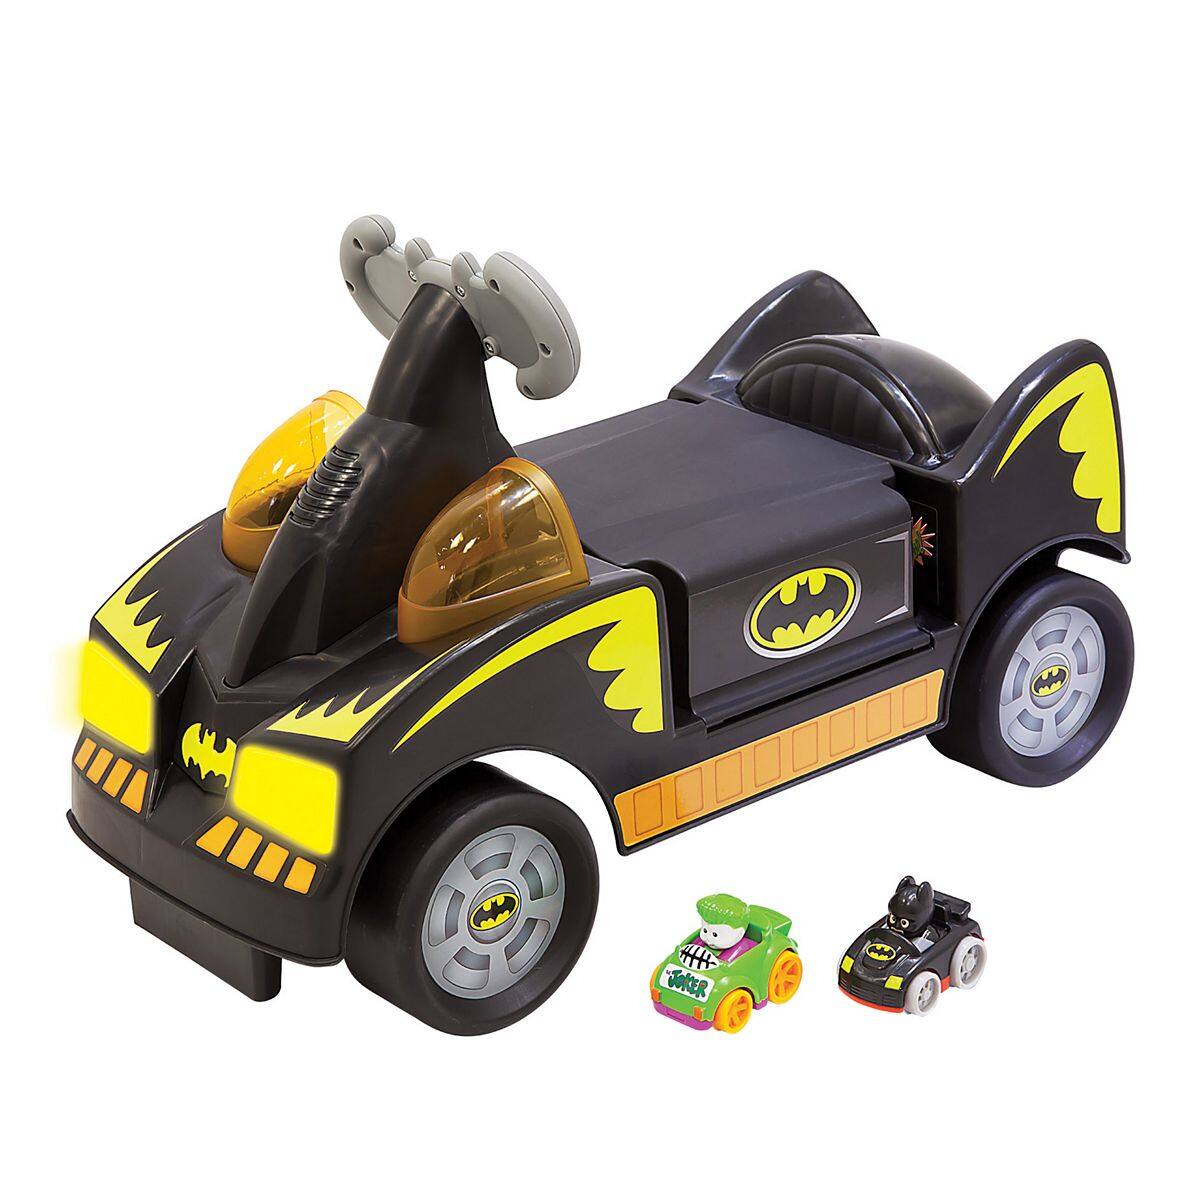 Little People Batman Wheelies Ride-On $20, Little Tikes Basketball Hoop $20, Step2 Shopping Cart with Bonus Food and Bag $20 + $15 in Kohls Cash on $50 + Free Pickup